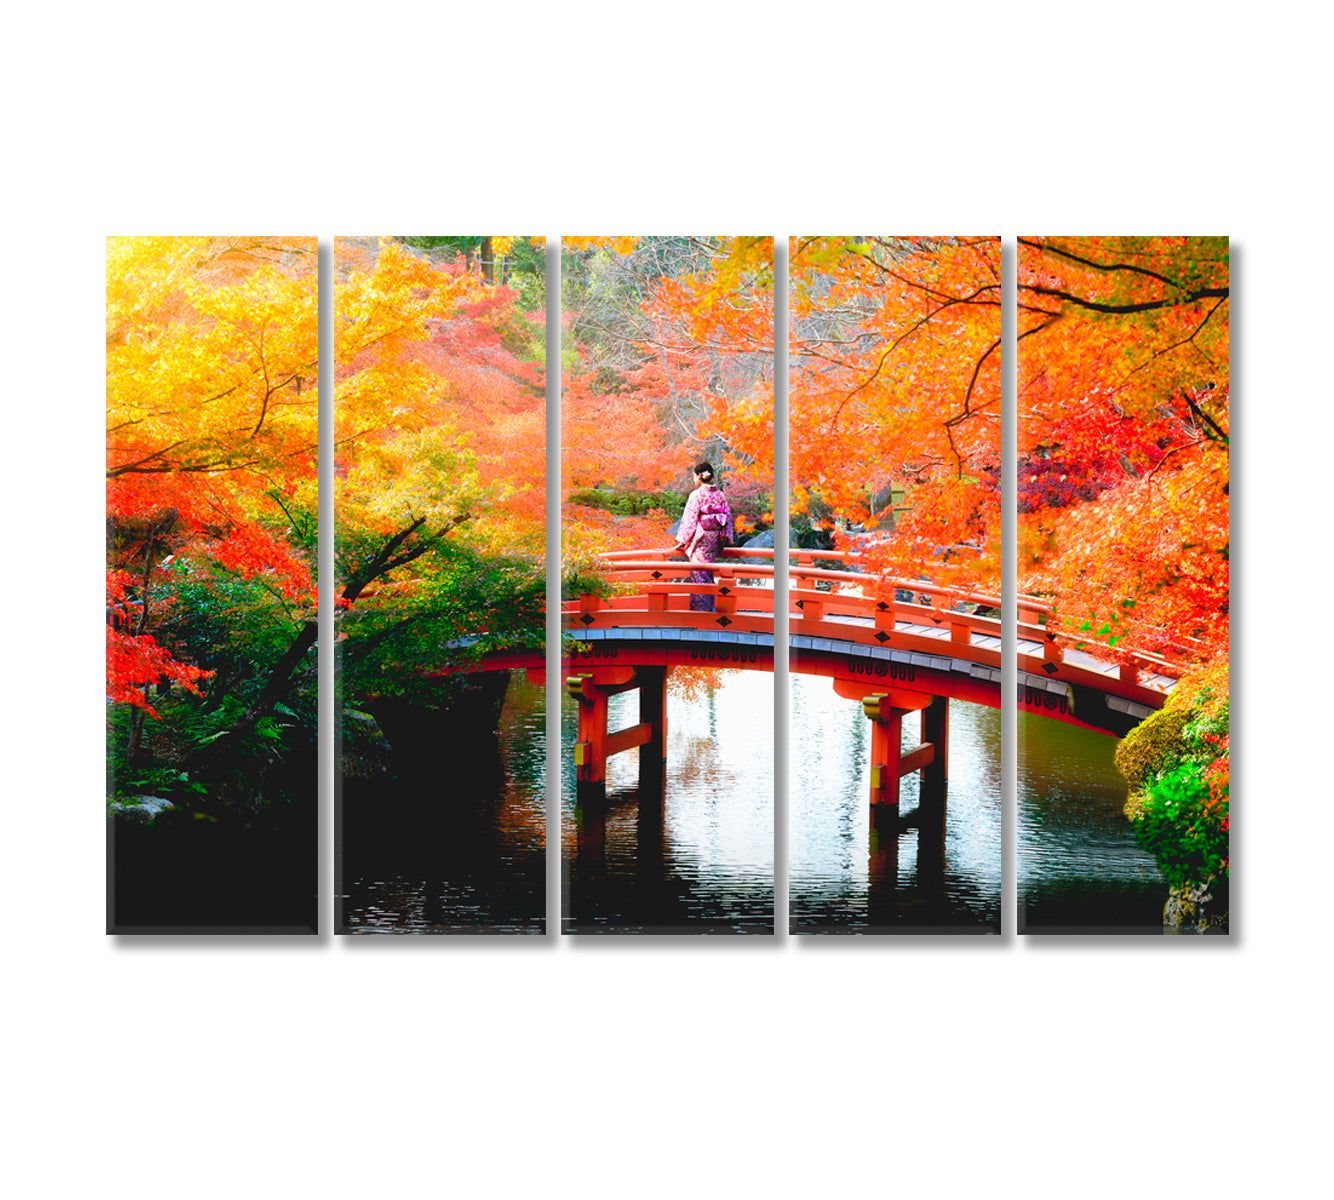 Wooden Bridge in Autumn Park Japan Canvas Print-Canvas Print-CetArt-5 Panels-36x24 inches-CetArt